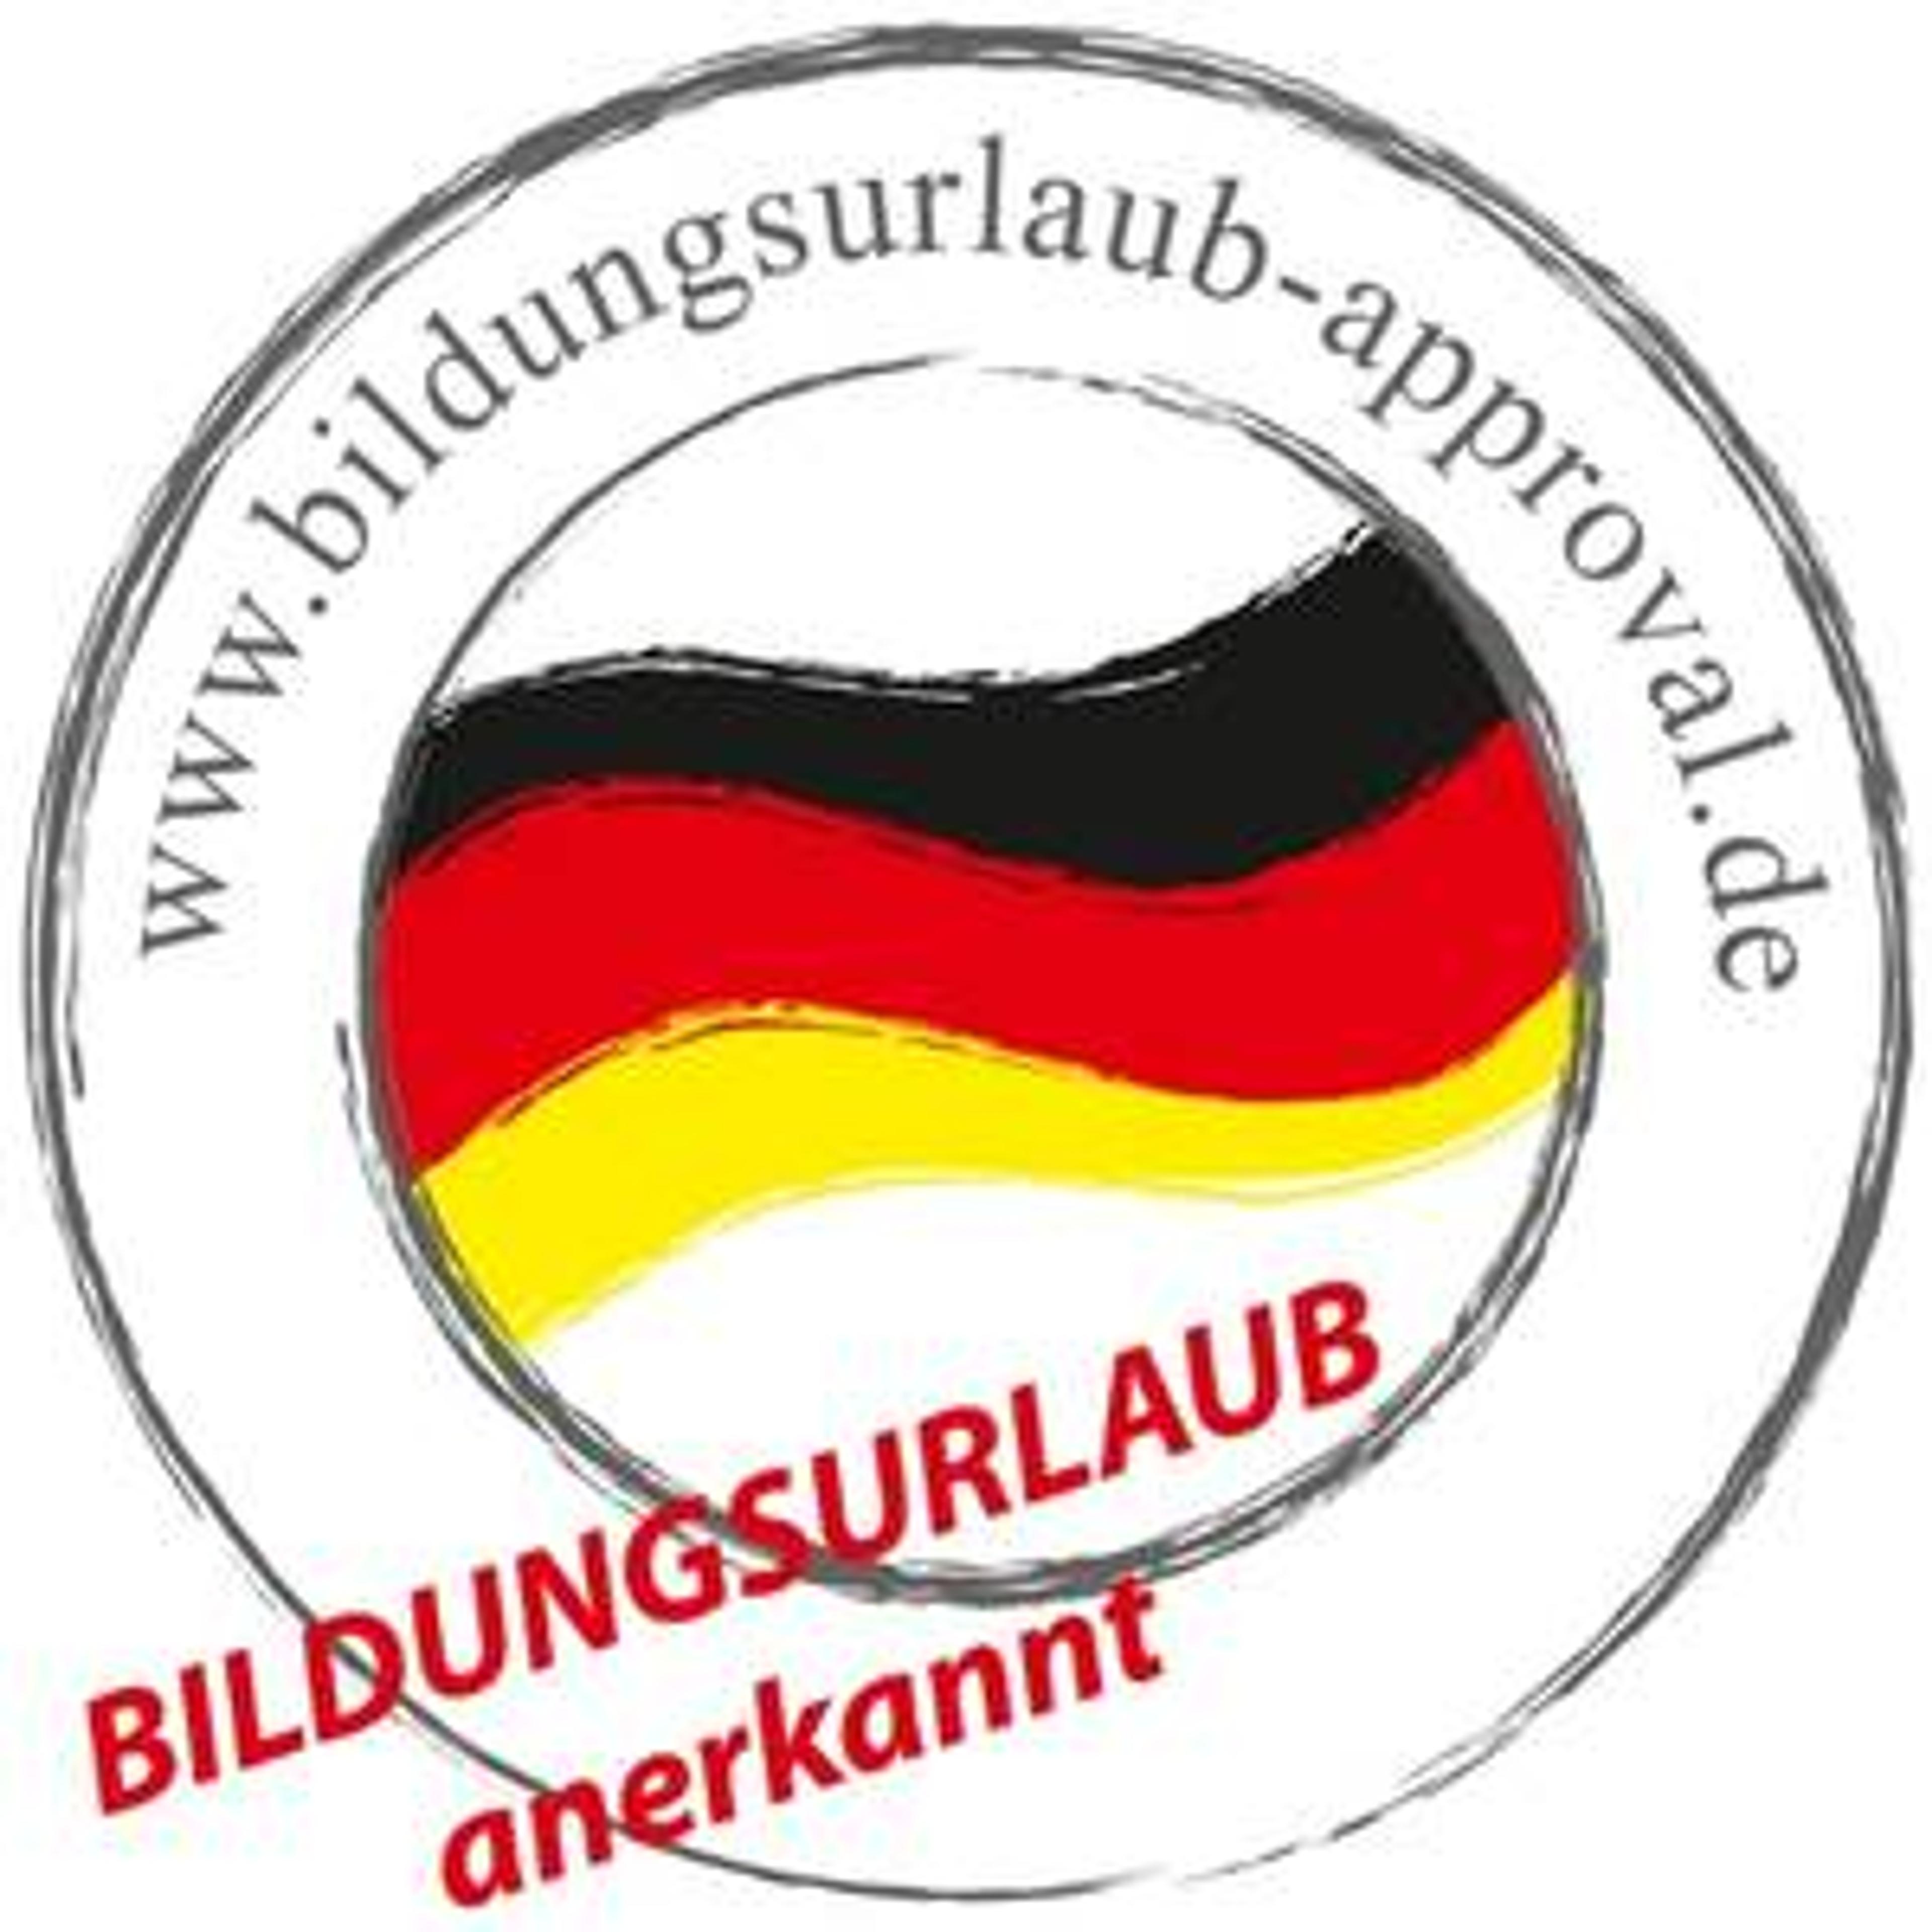 BU logo.jpg